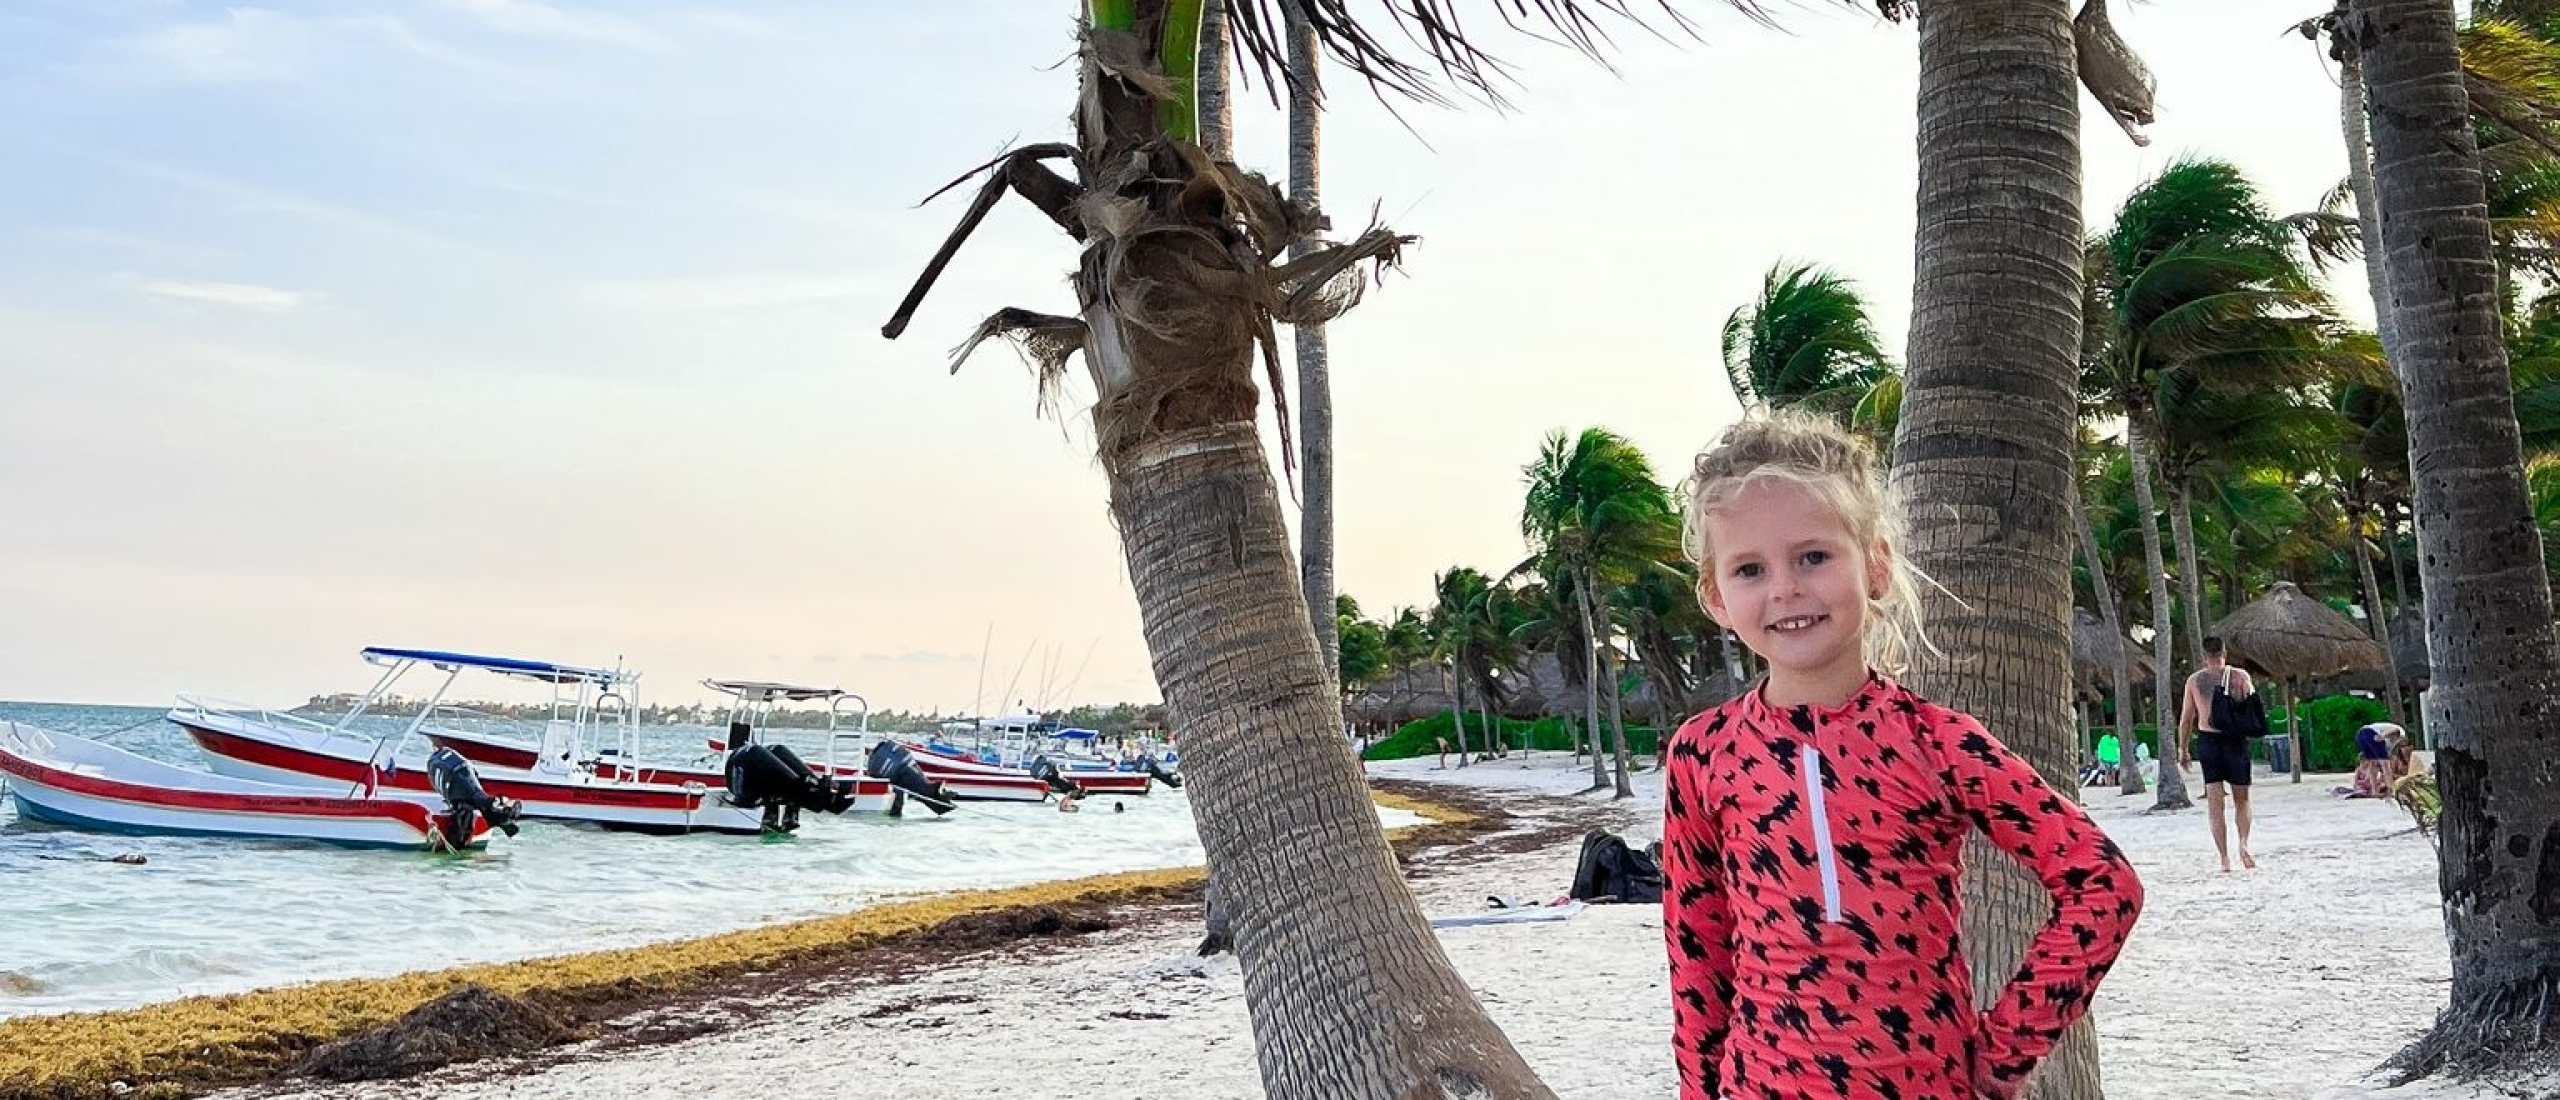 9 x wat leuk is om te doen met kinderen in Playa del Carmen, Mexico